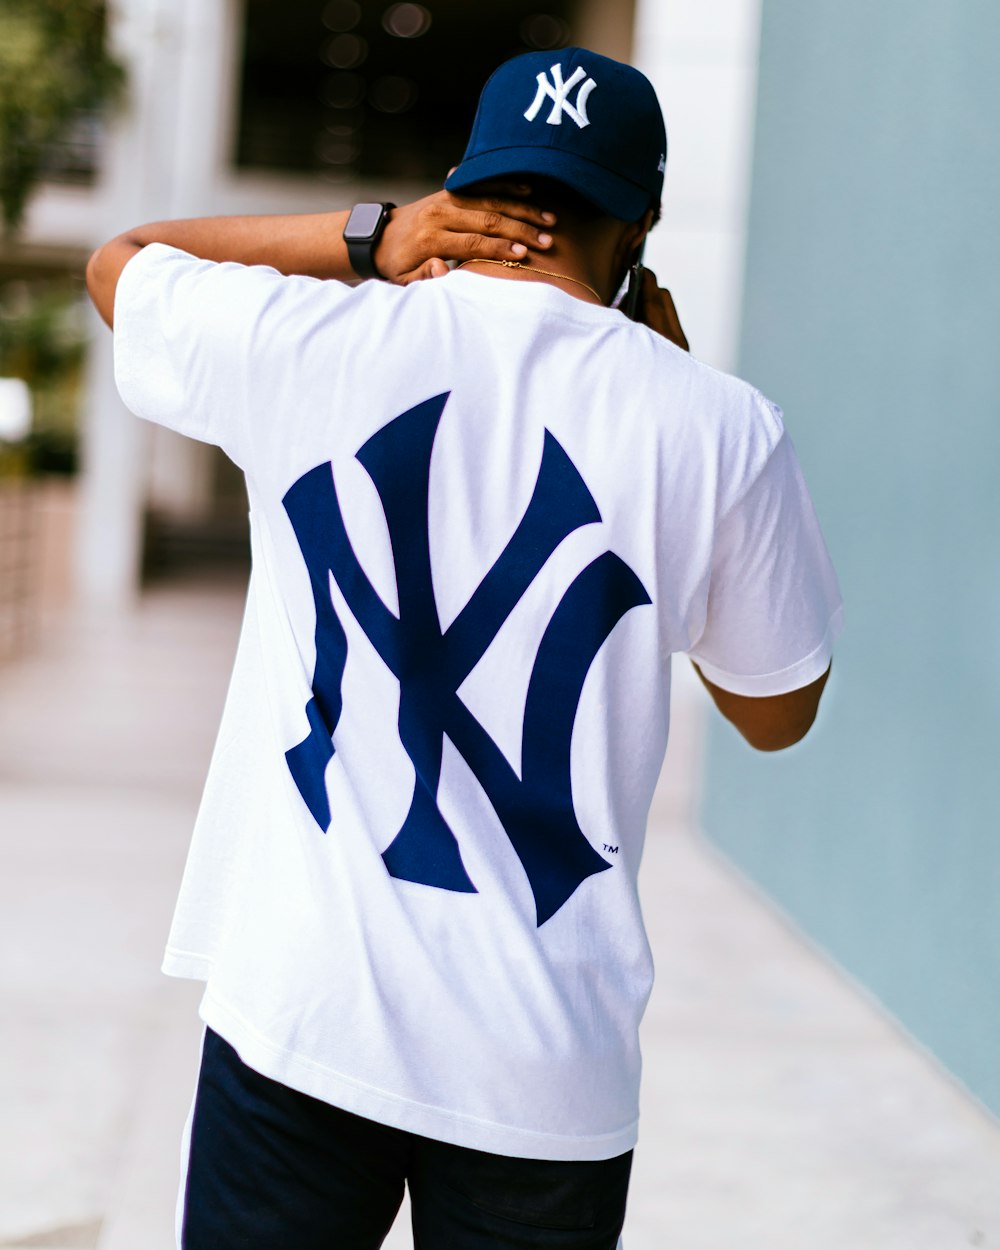 Man wearing white and blue New York Yankees t-shirt walking while